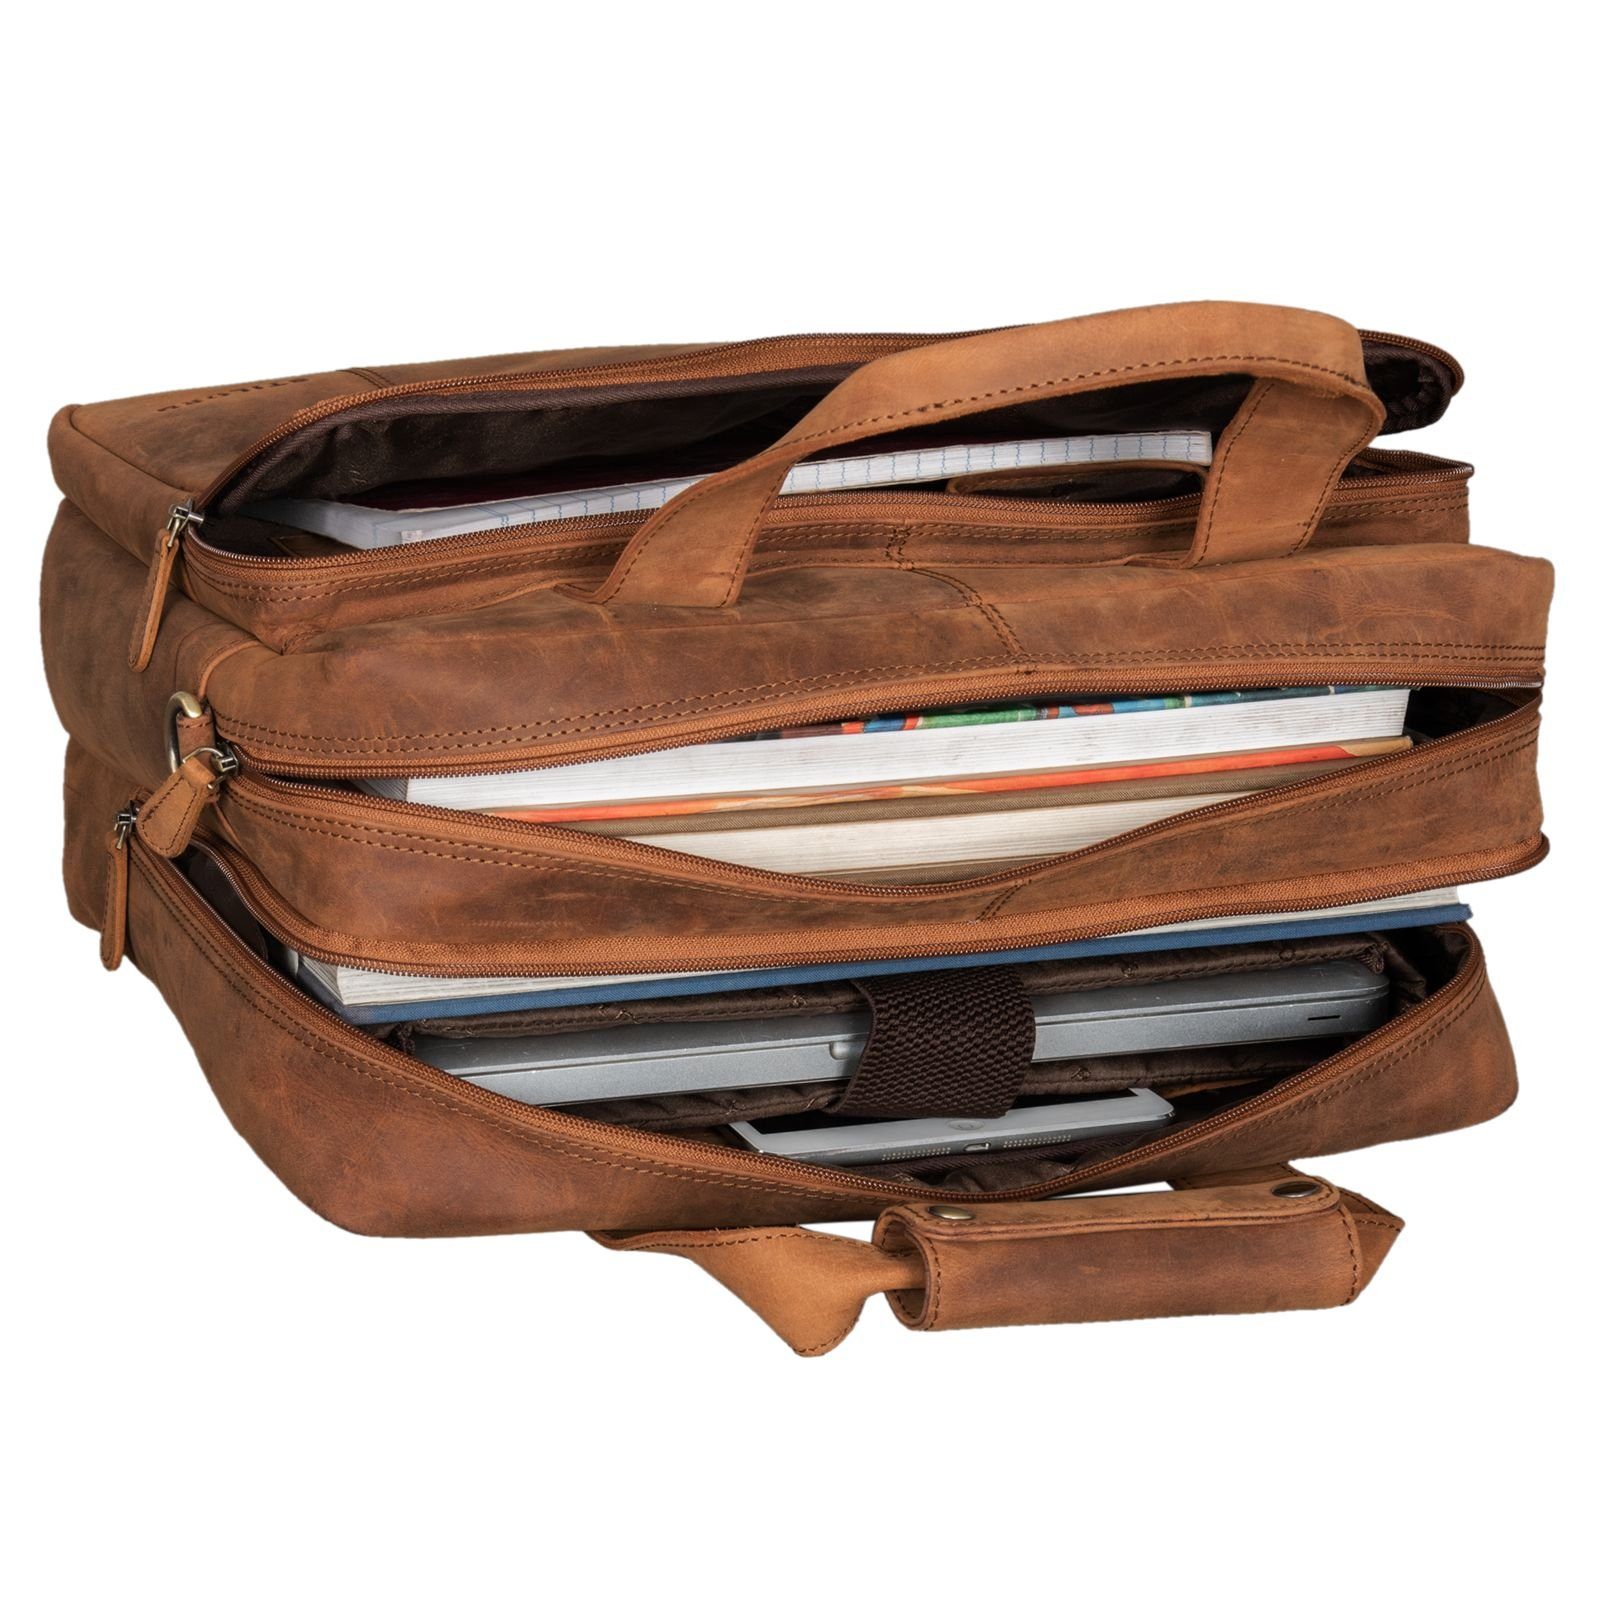 groß - "Experience" Aktentasche STILORD dunkelbraun Leder tan Vintage Lehrertasche